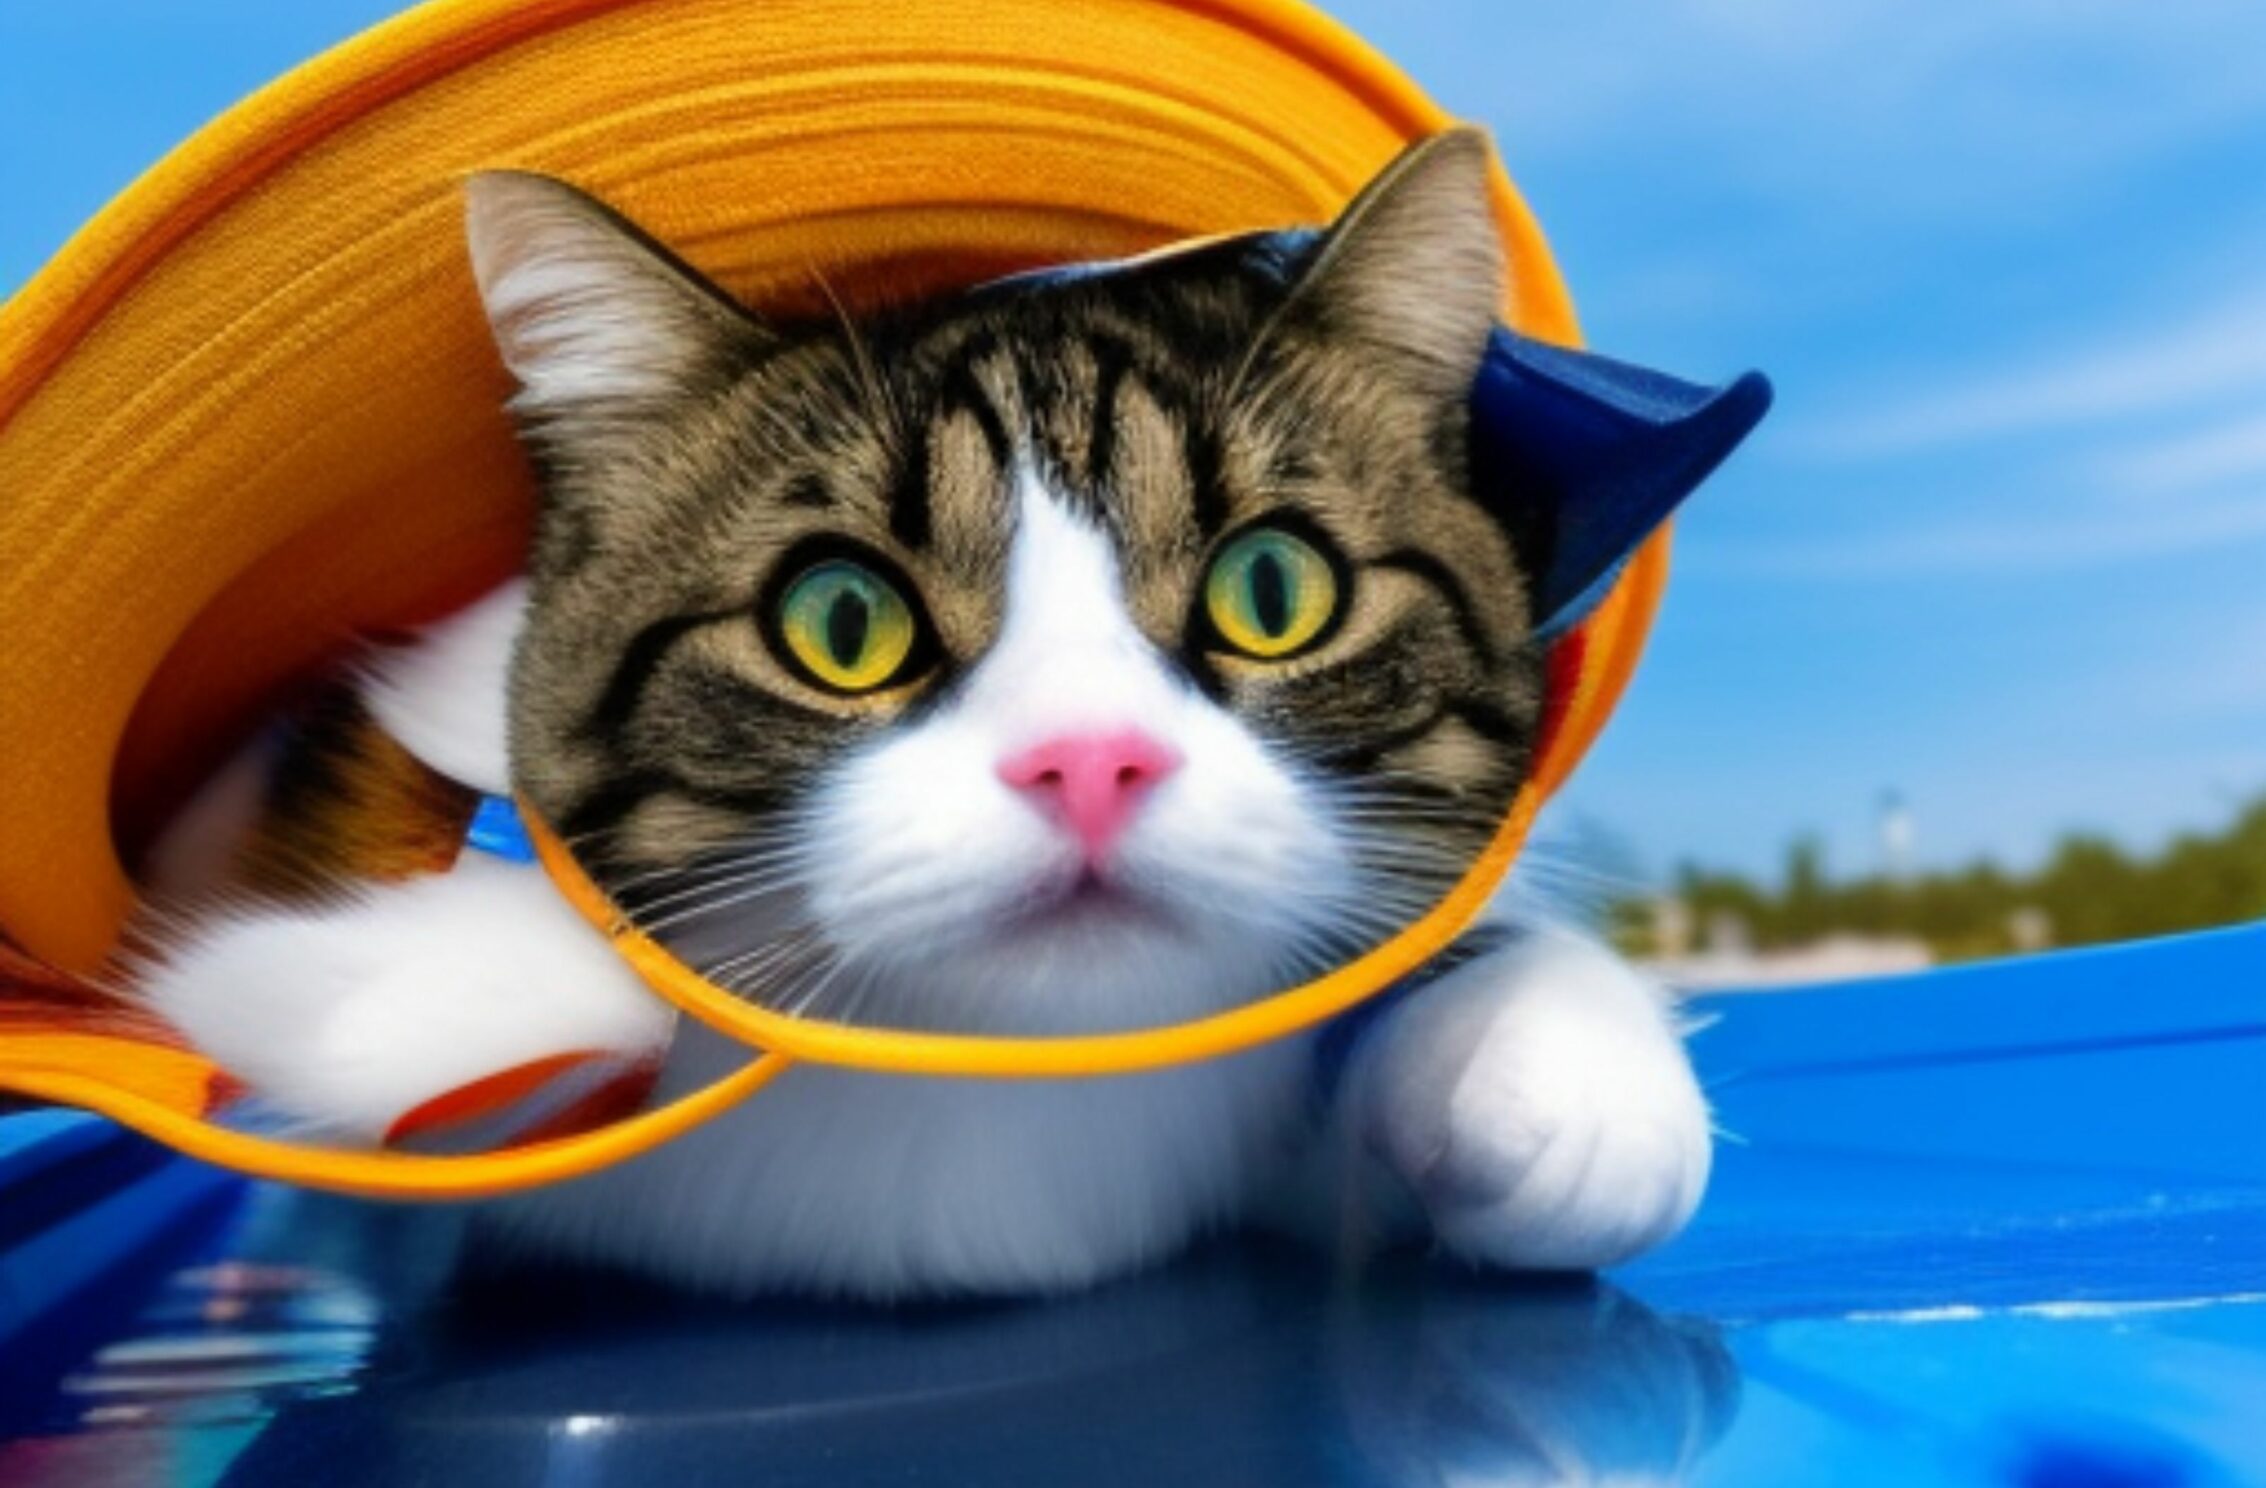 2266x1488 wallpaper Cat With a Hat Looking iPad Wallpaper 2266x1488 pixels resolution